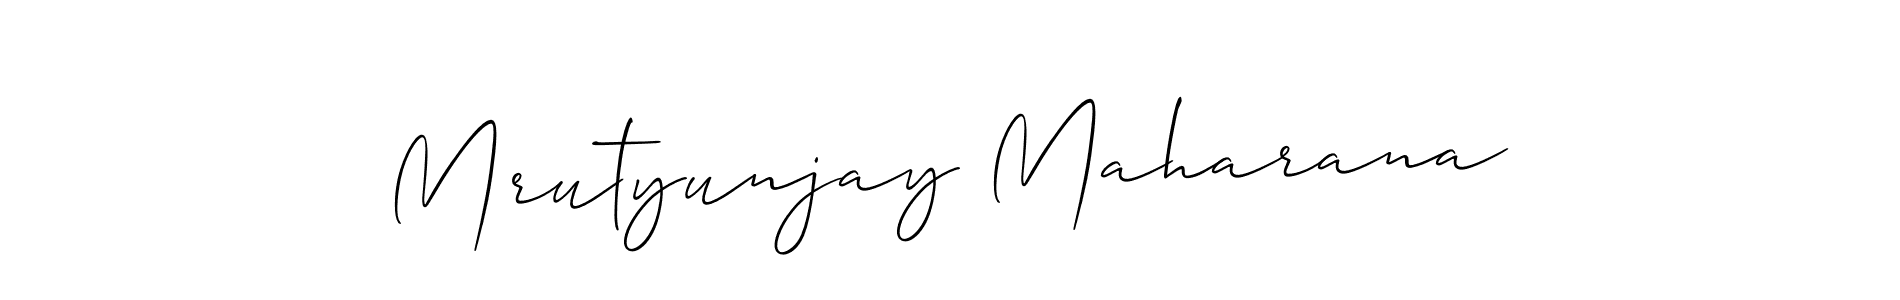 95+ Mrutyunjay Maharana Name Signature Style Ideas | Cool Online Autograph